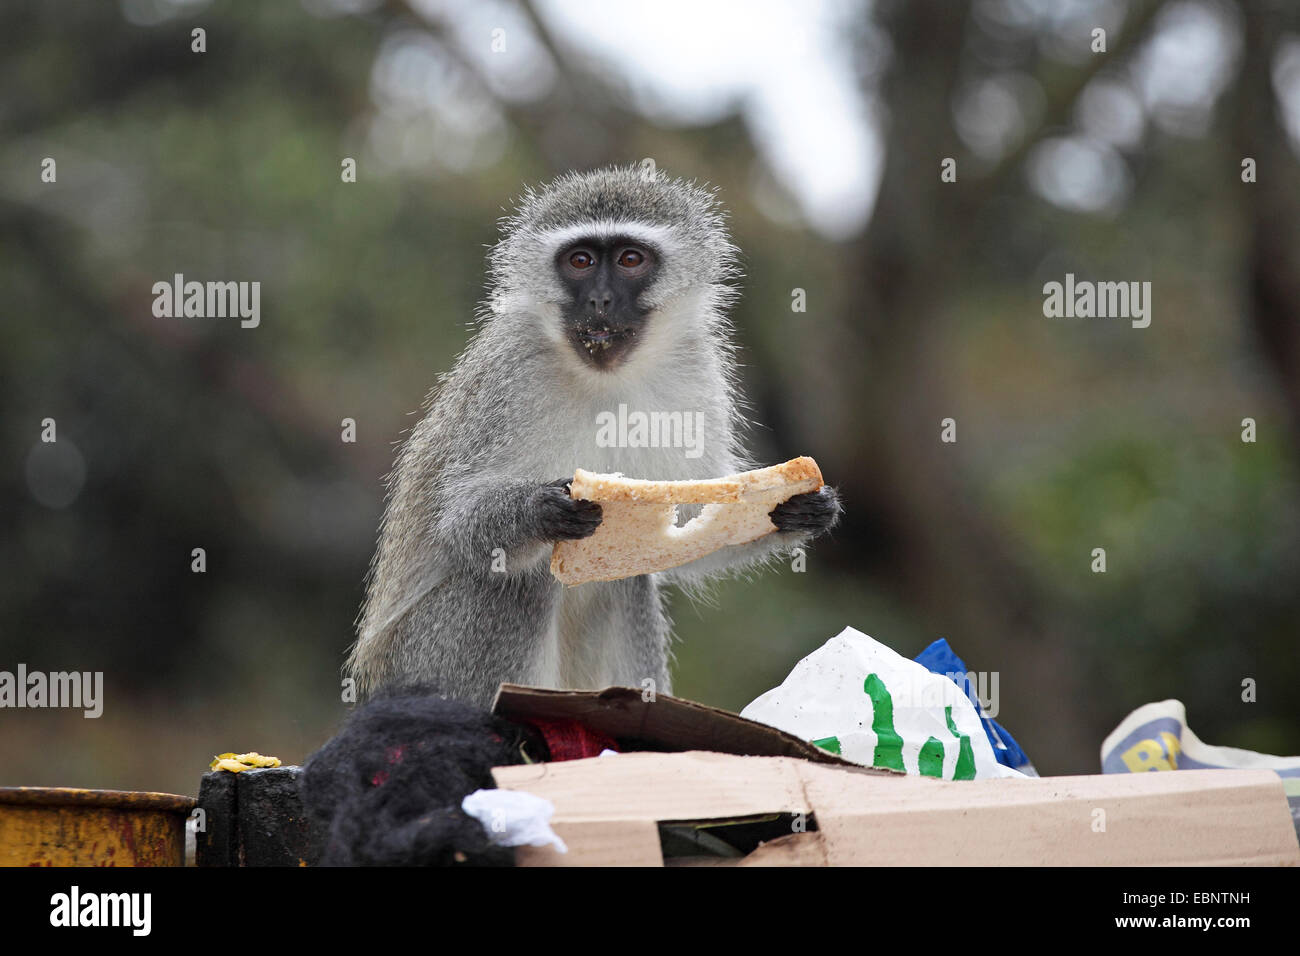 Grivet monkey, Savanna monkey, Green monkey, Vervet monkey (Cercopithecus aethiops), eating bread from a bin, South Africa, St. Lucia Wetland Park Stock Photo